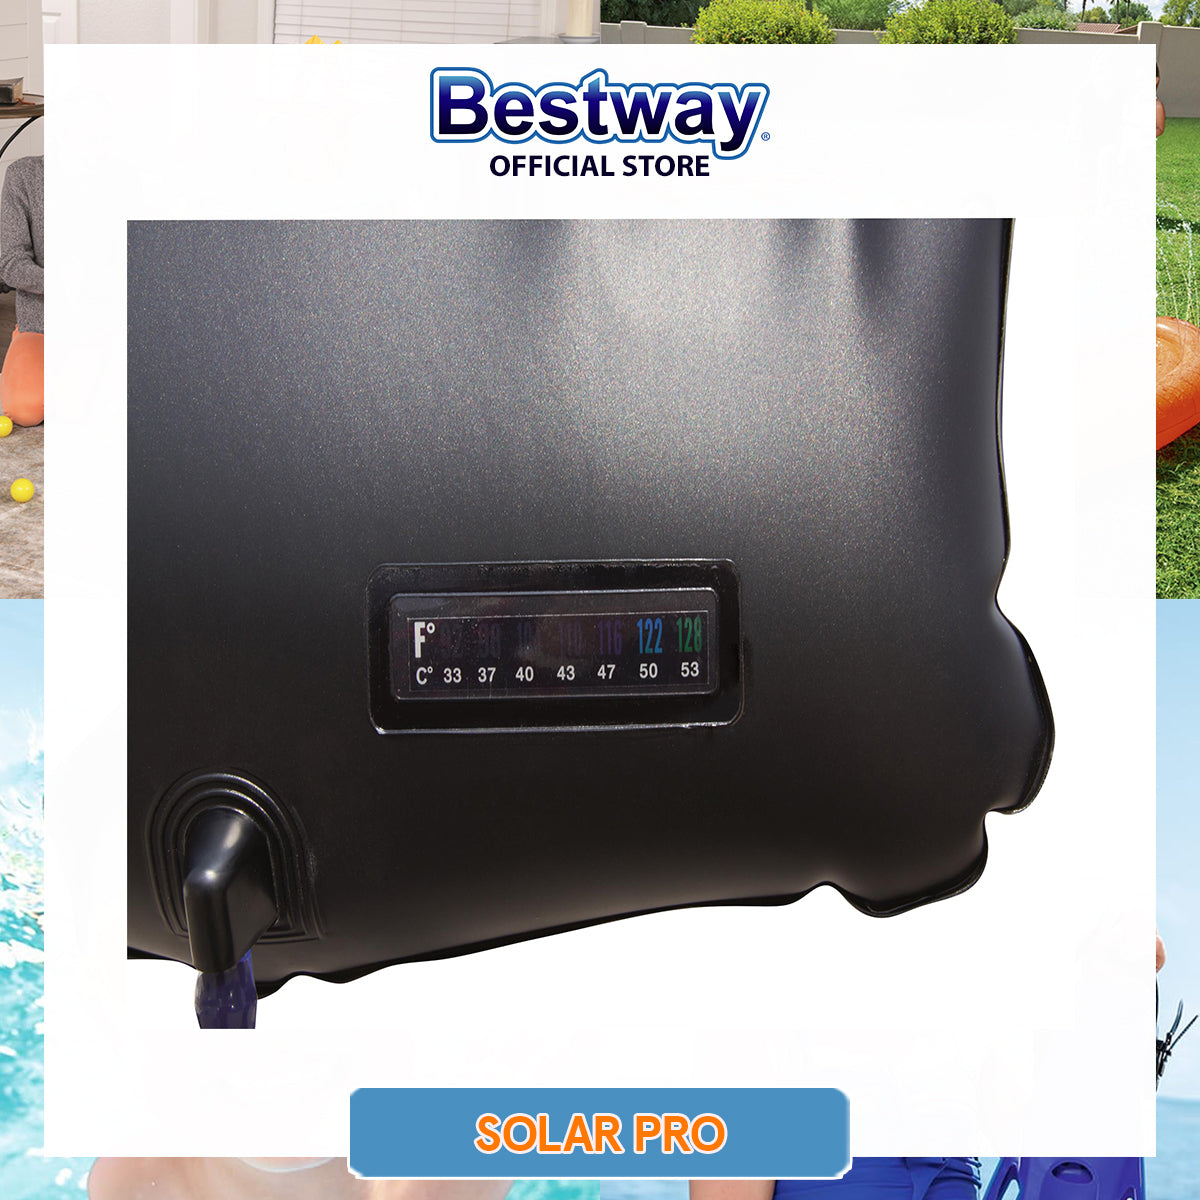 Bestway Solar-Pro Shower (20 Liters)